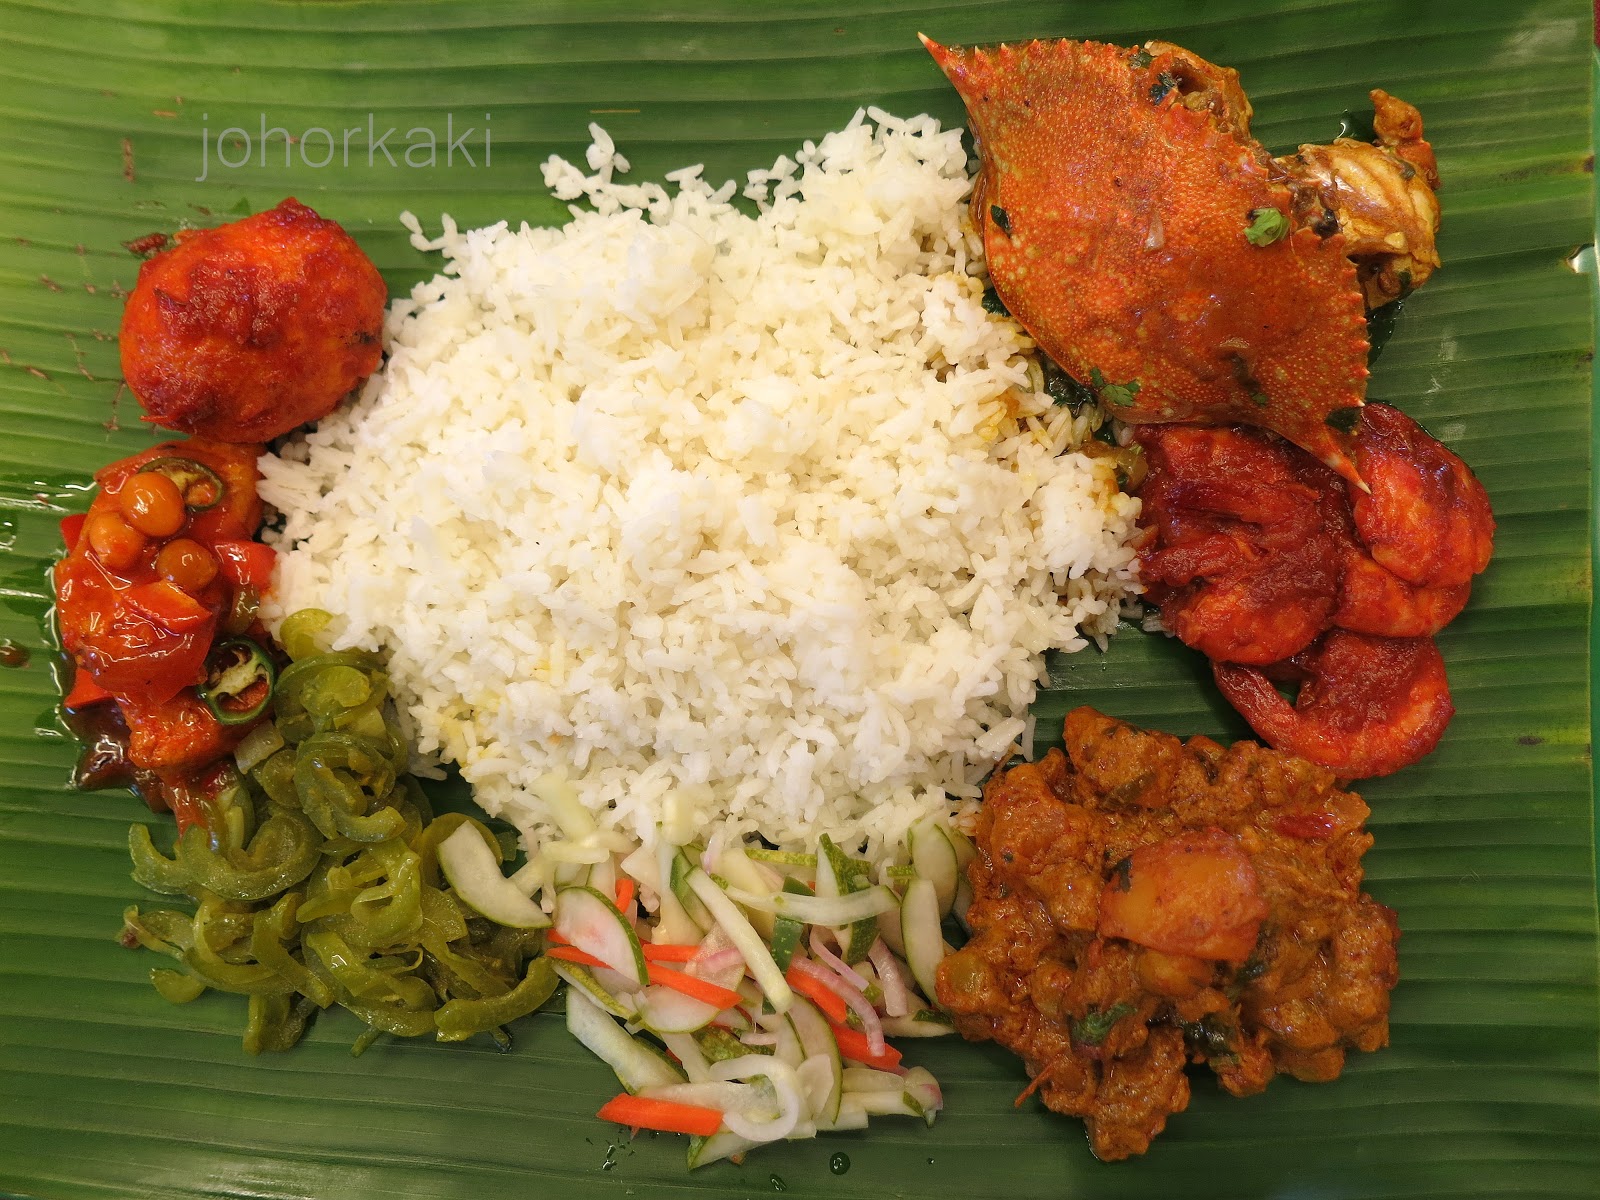 GIANT Caterers (Halal Indian Food) in Plentong, Johor Bahru |Johor Kaki